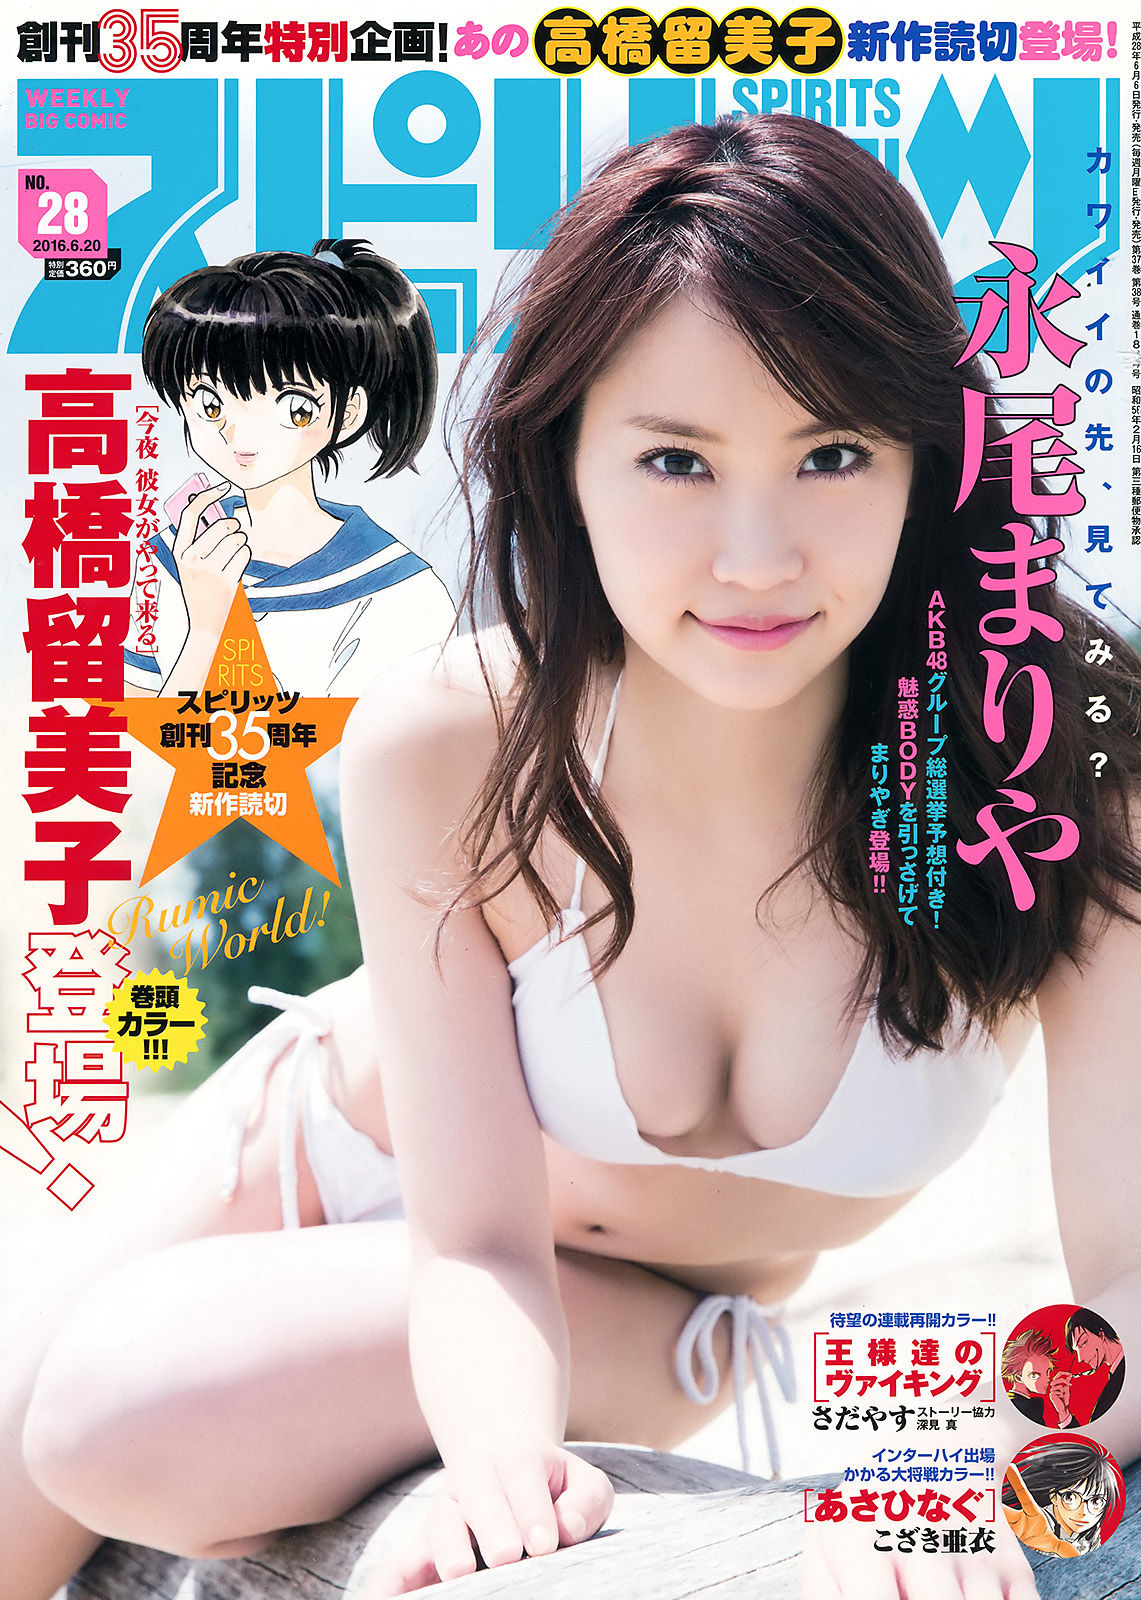 [Weekly Big Comic Spirits]美胸日本女星:永尾玛利亚(永尾まりや)高品质写真作品个人分享(7P)